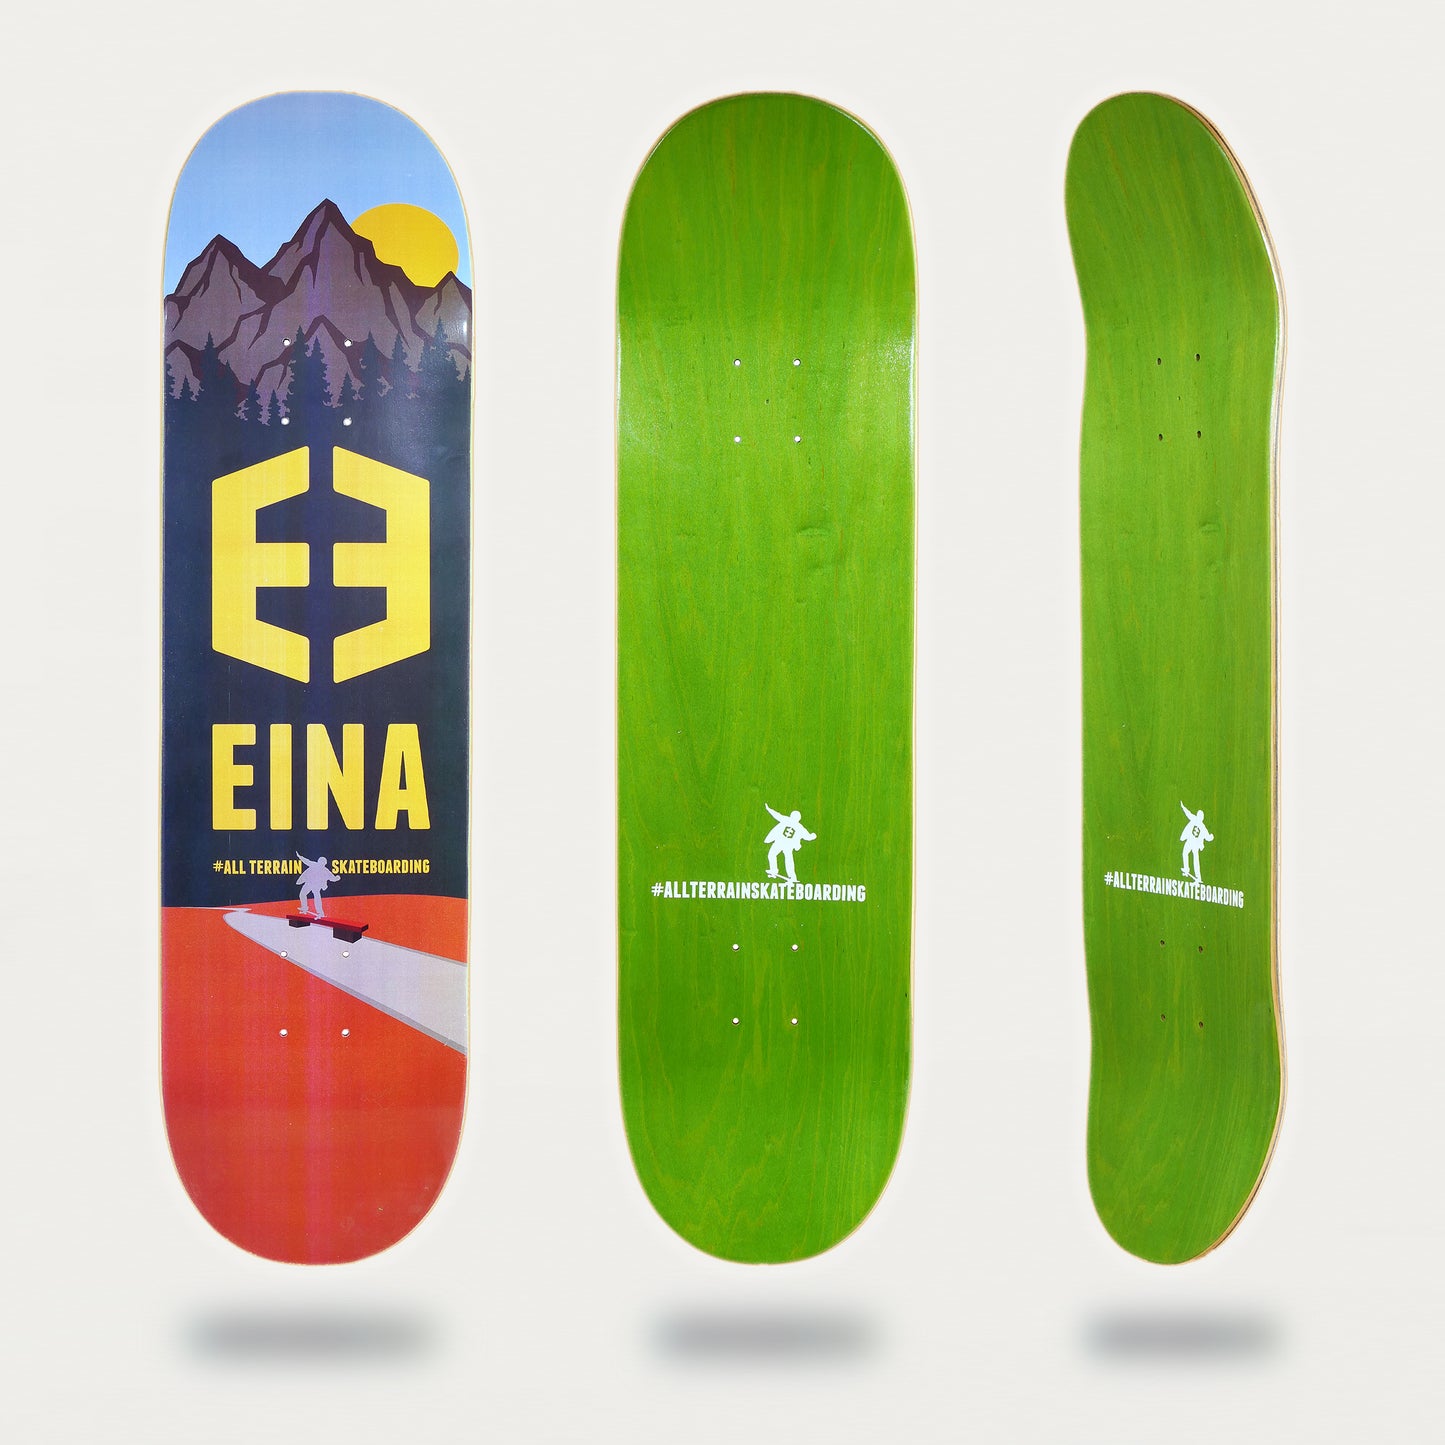 Tabla de Eina skateboard company "all terrain skateboarding" 8,25 pulgadas